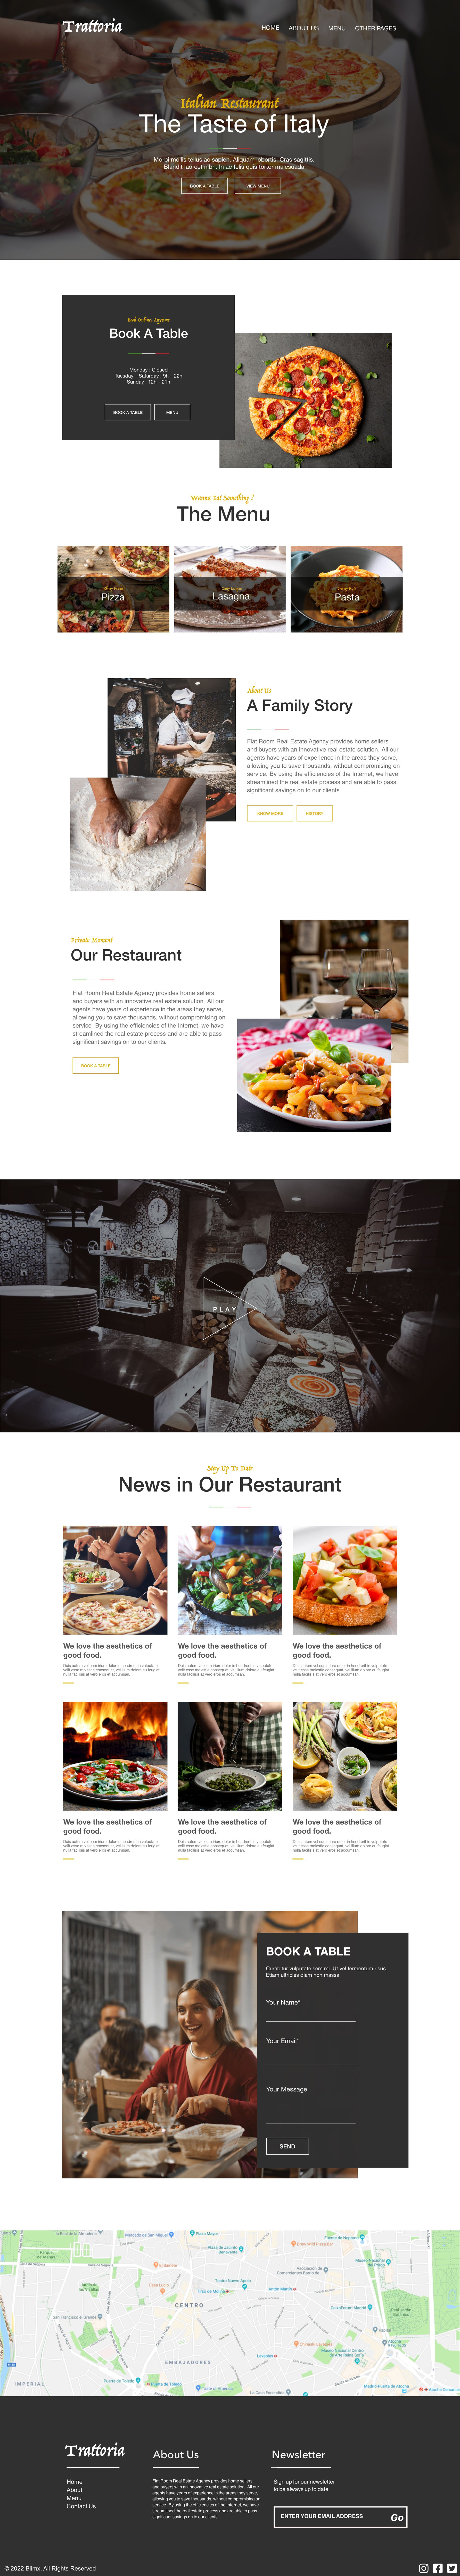 Italian Food Website Design